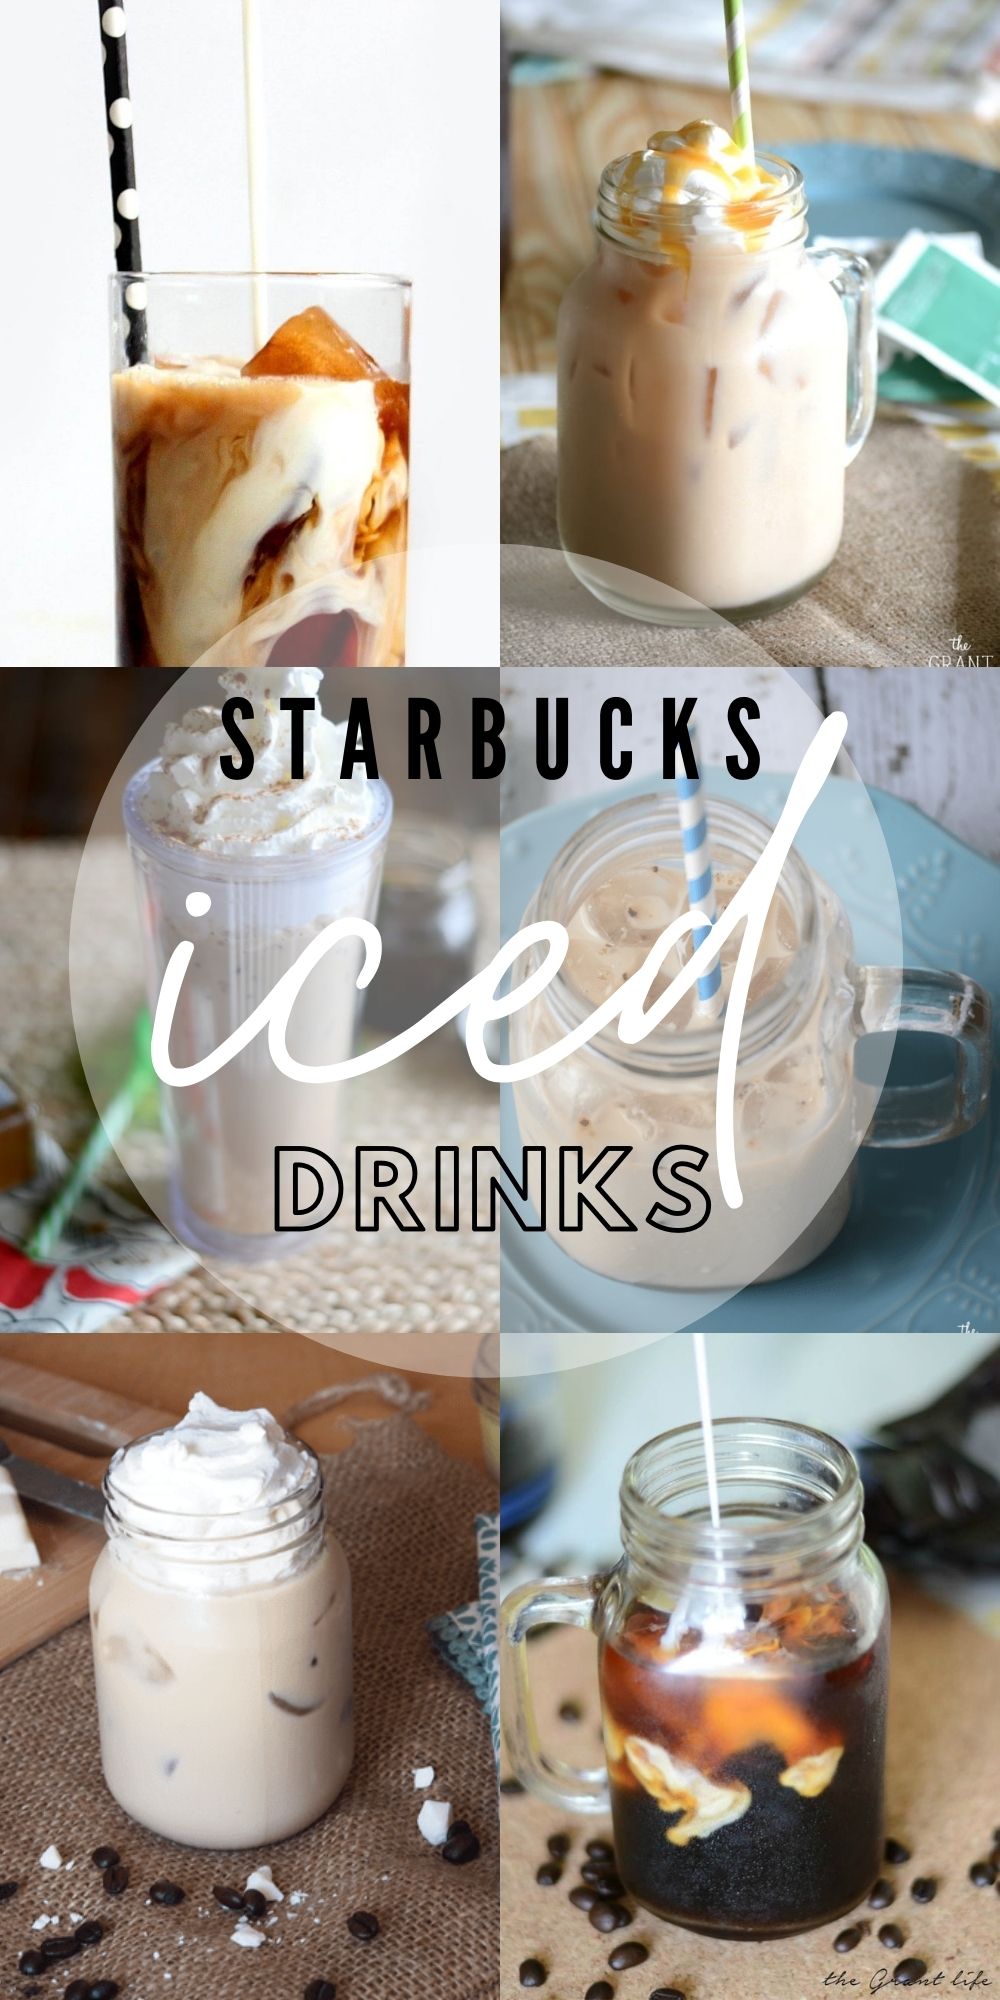 Cold brew  Starbucks drinks recipes, Coffee recipes, Starbucks recipes